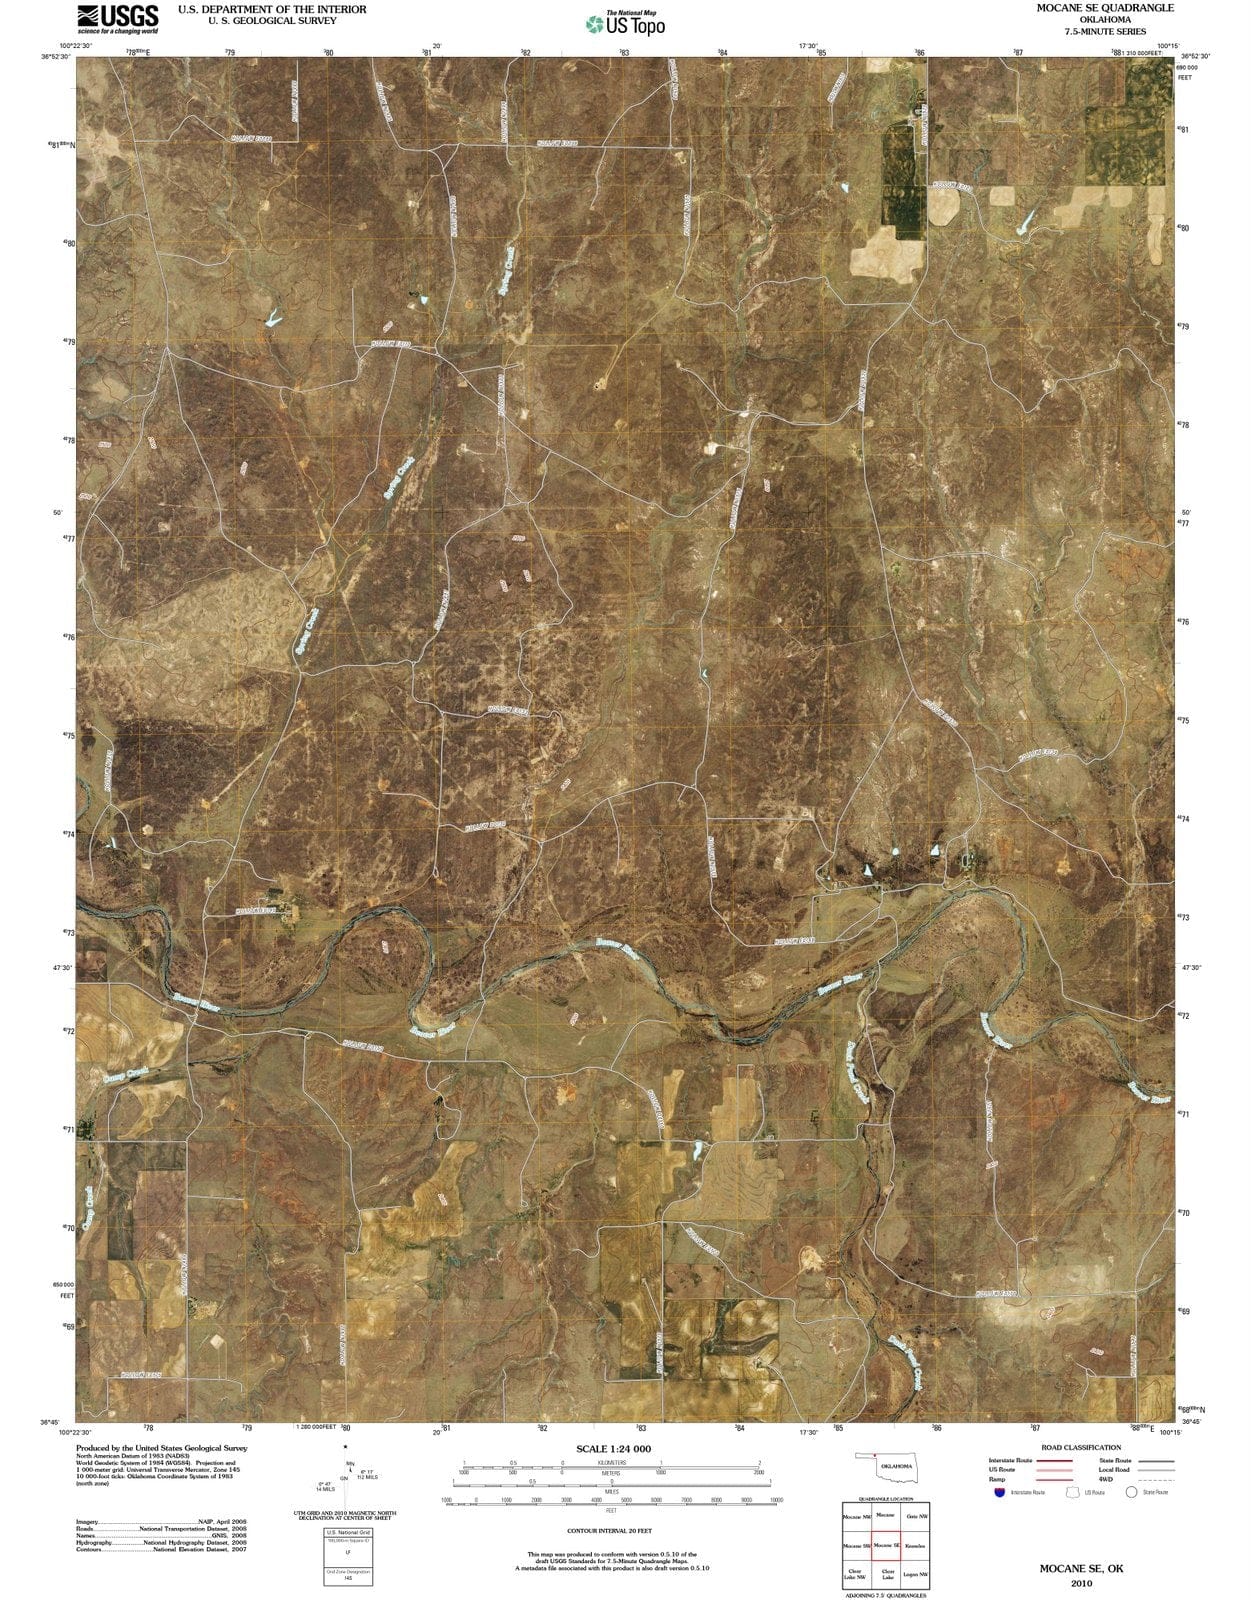 2010 Mocane, OK - Oklahoma - USGS Topographic Map